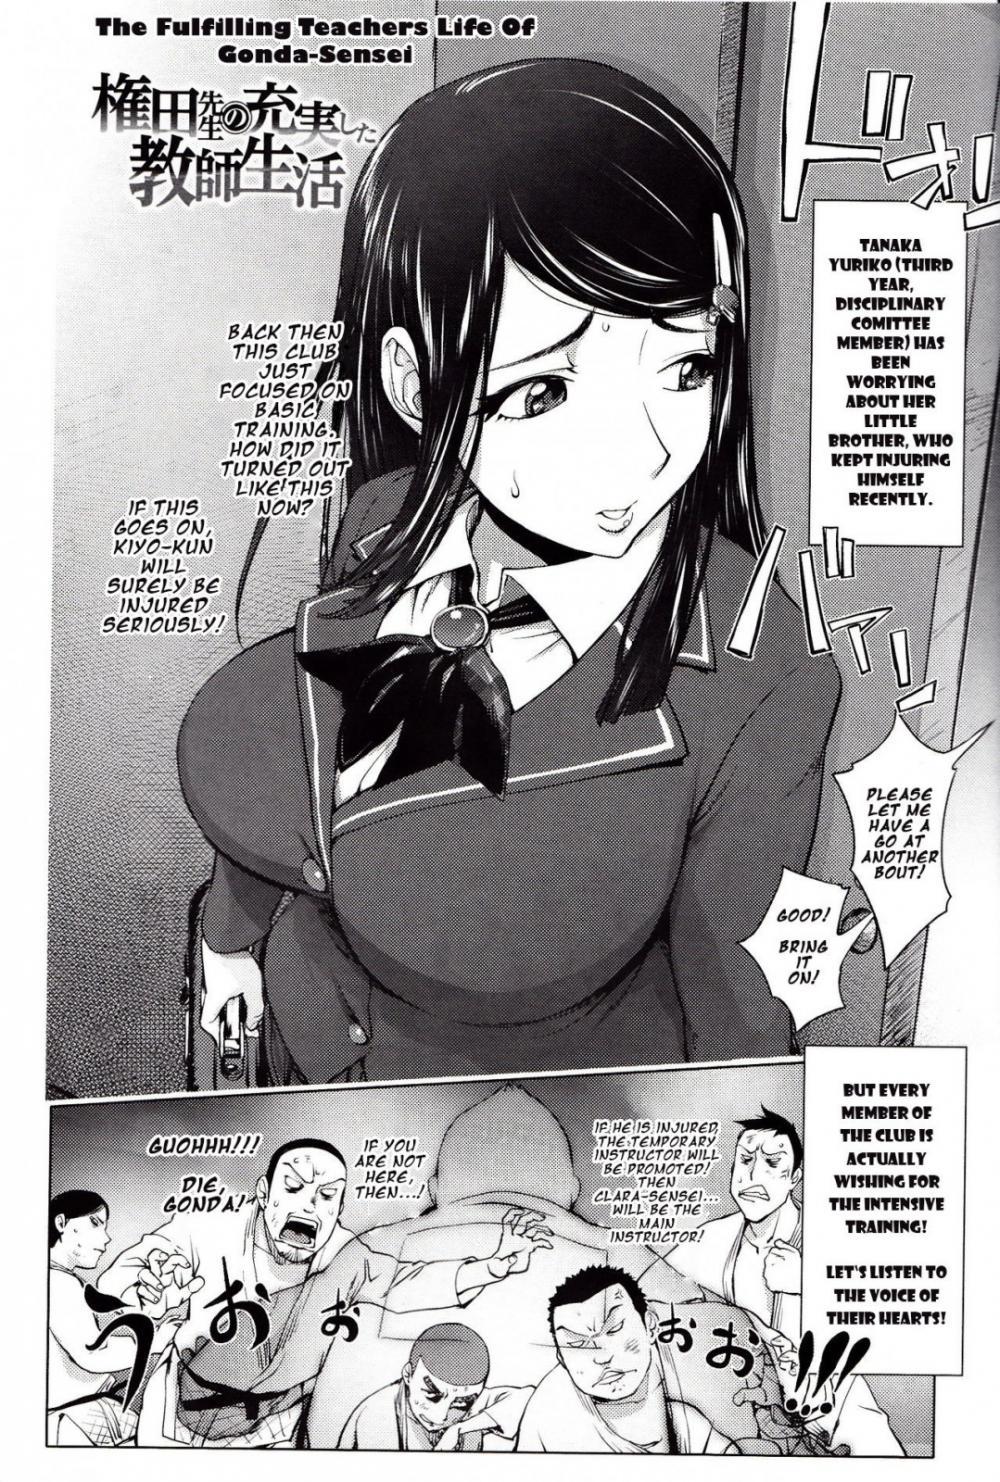 Hentai Manga Comic-The Fulfilling Teachers Life of Gonda-Sensei-Read-2